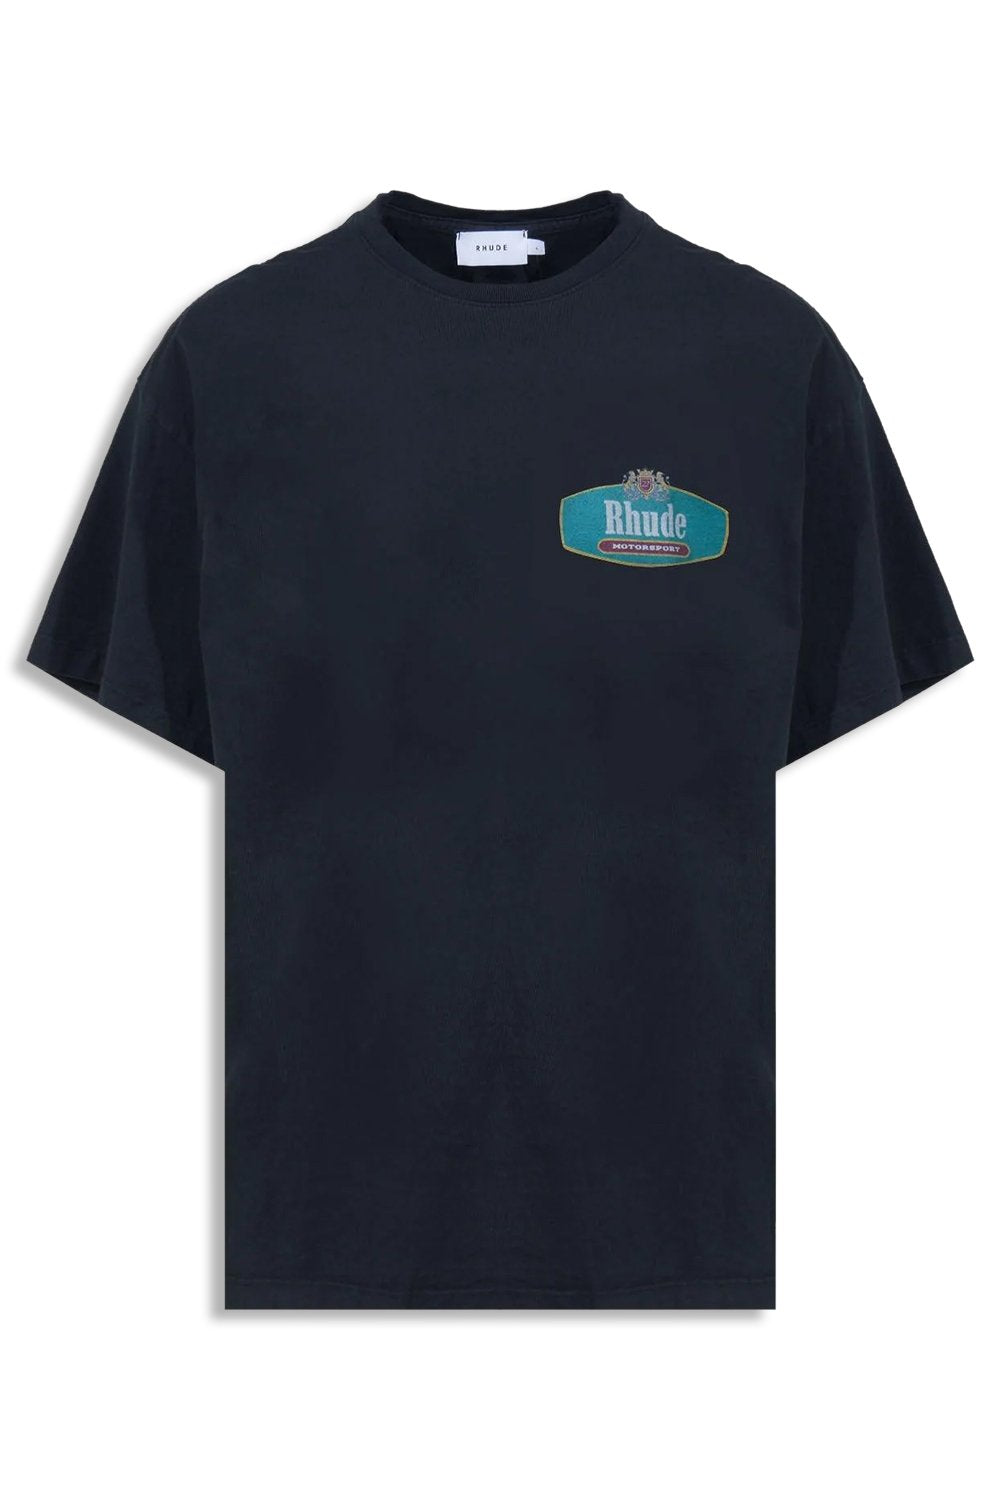 Men's Black Rhude Race Crest Vintage Logo T-Shirt